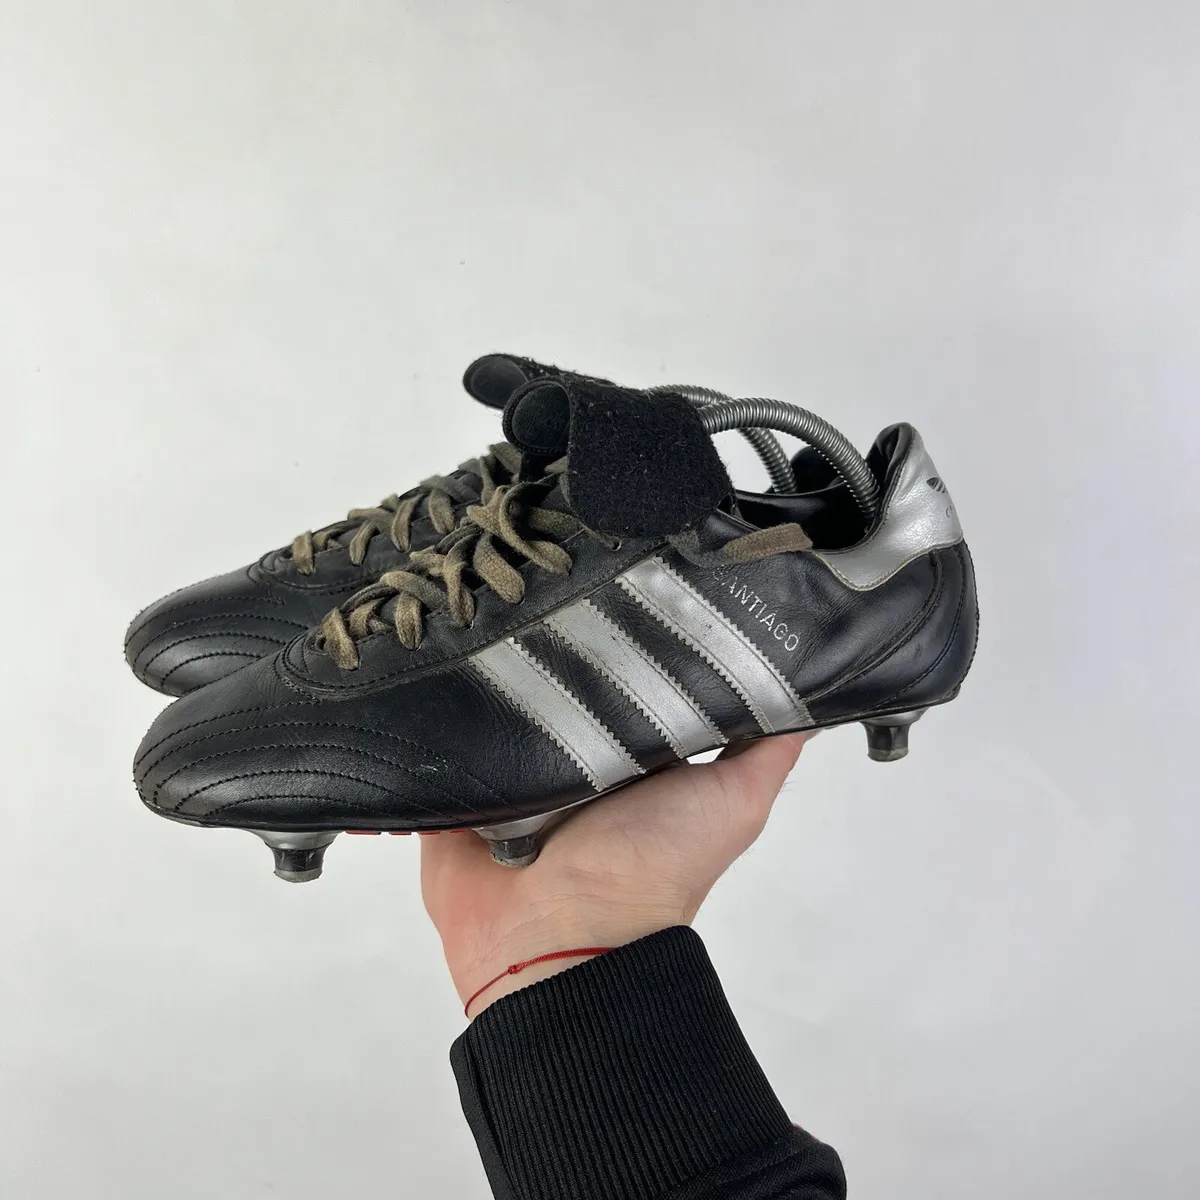 Vintage 70s 80s Adidas Santiago Soccer football Boots Size 1/2 Rare eBay